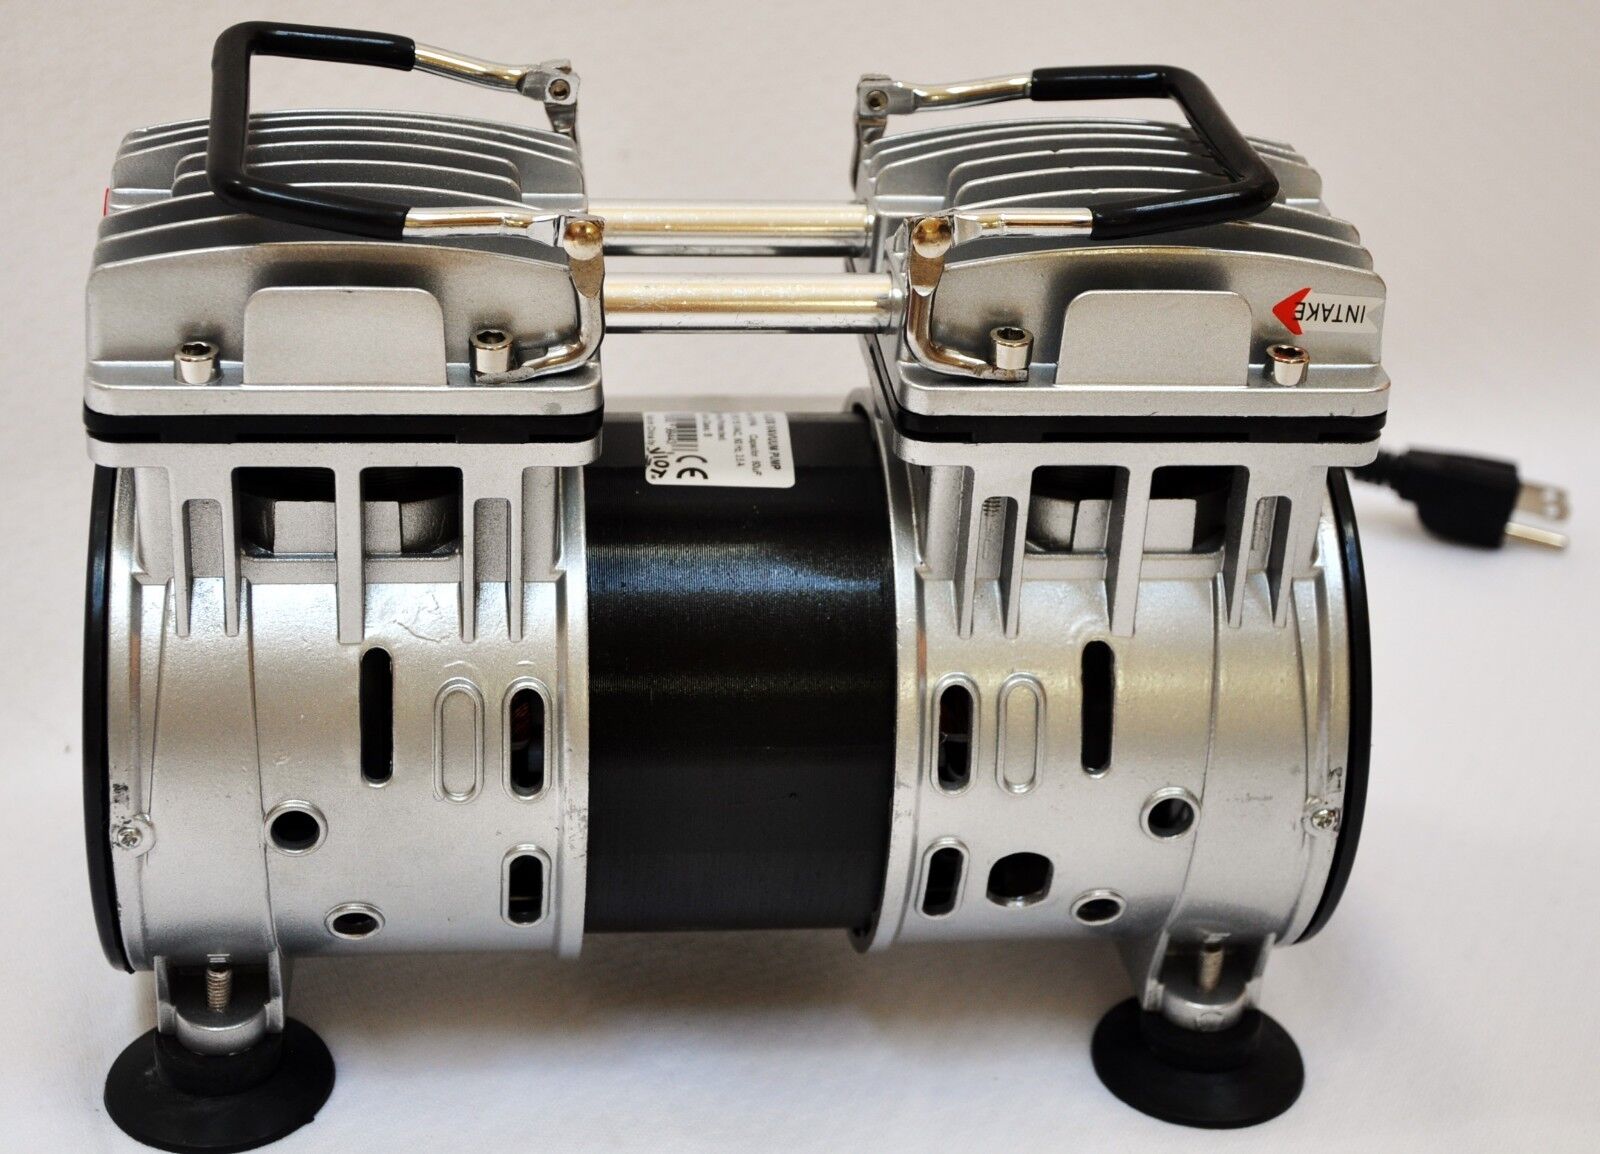 Twin Piston Oil-less Vacuum Pump 4.5CFM Lab Workshop Milker Chuck Bagging Hookup